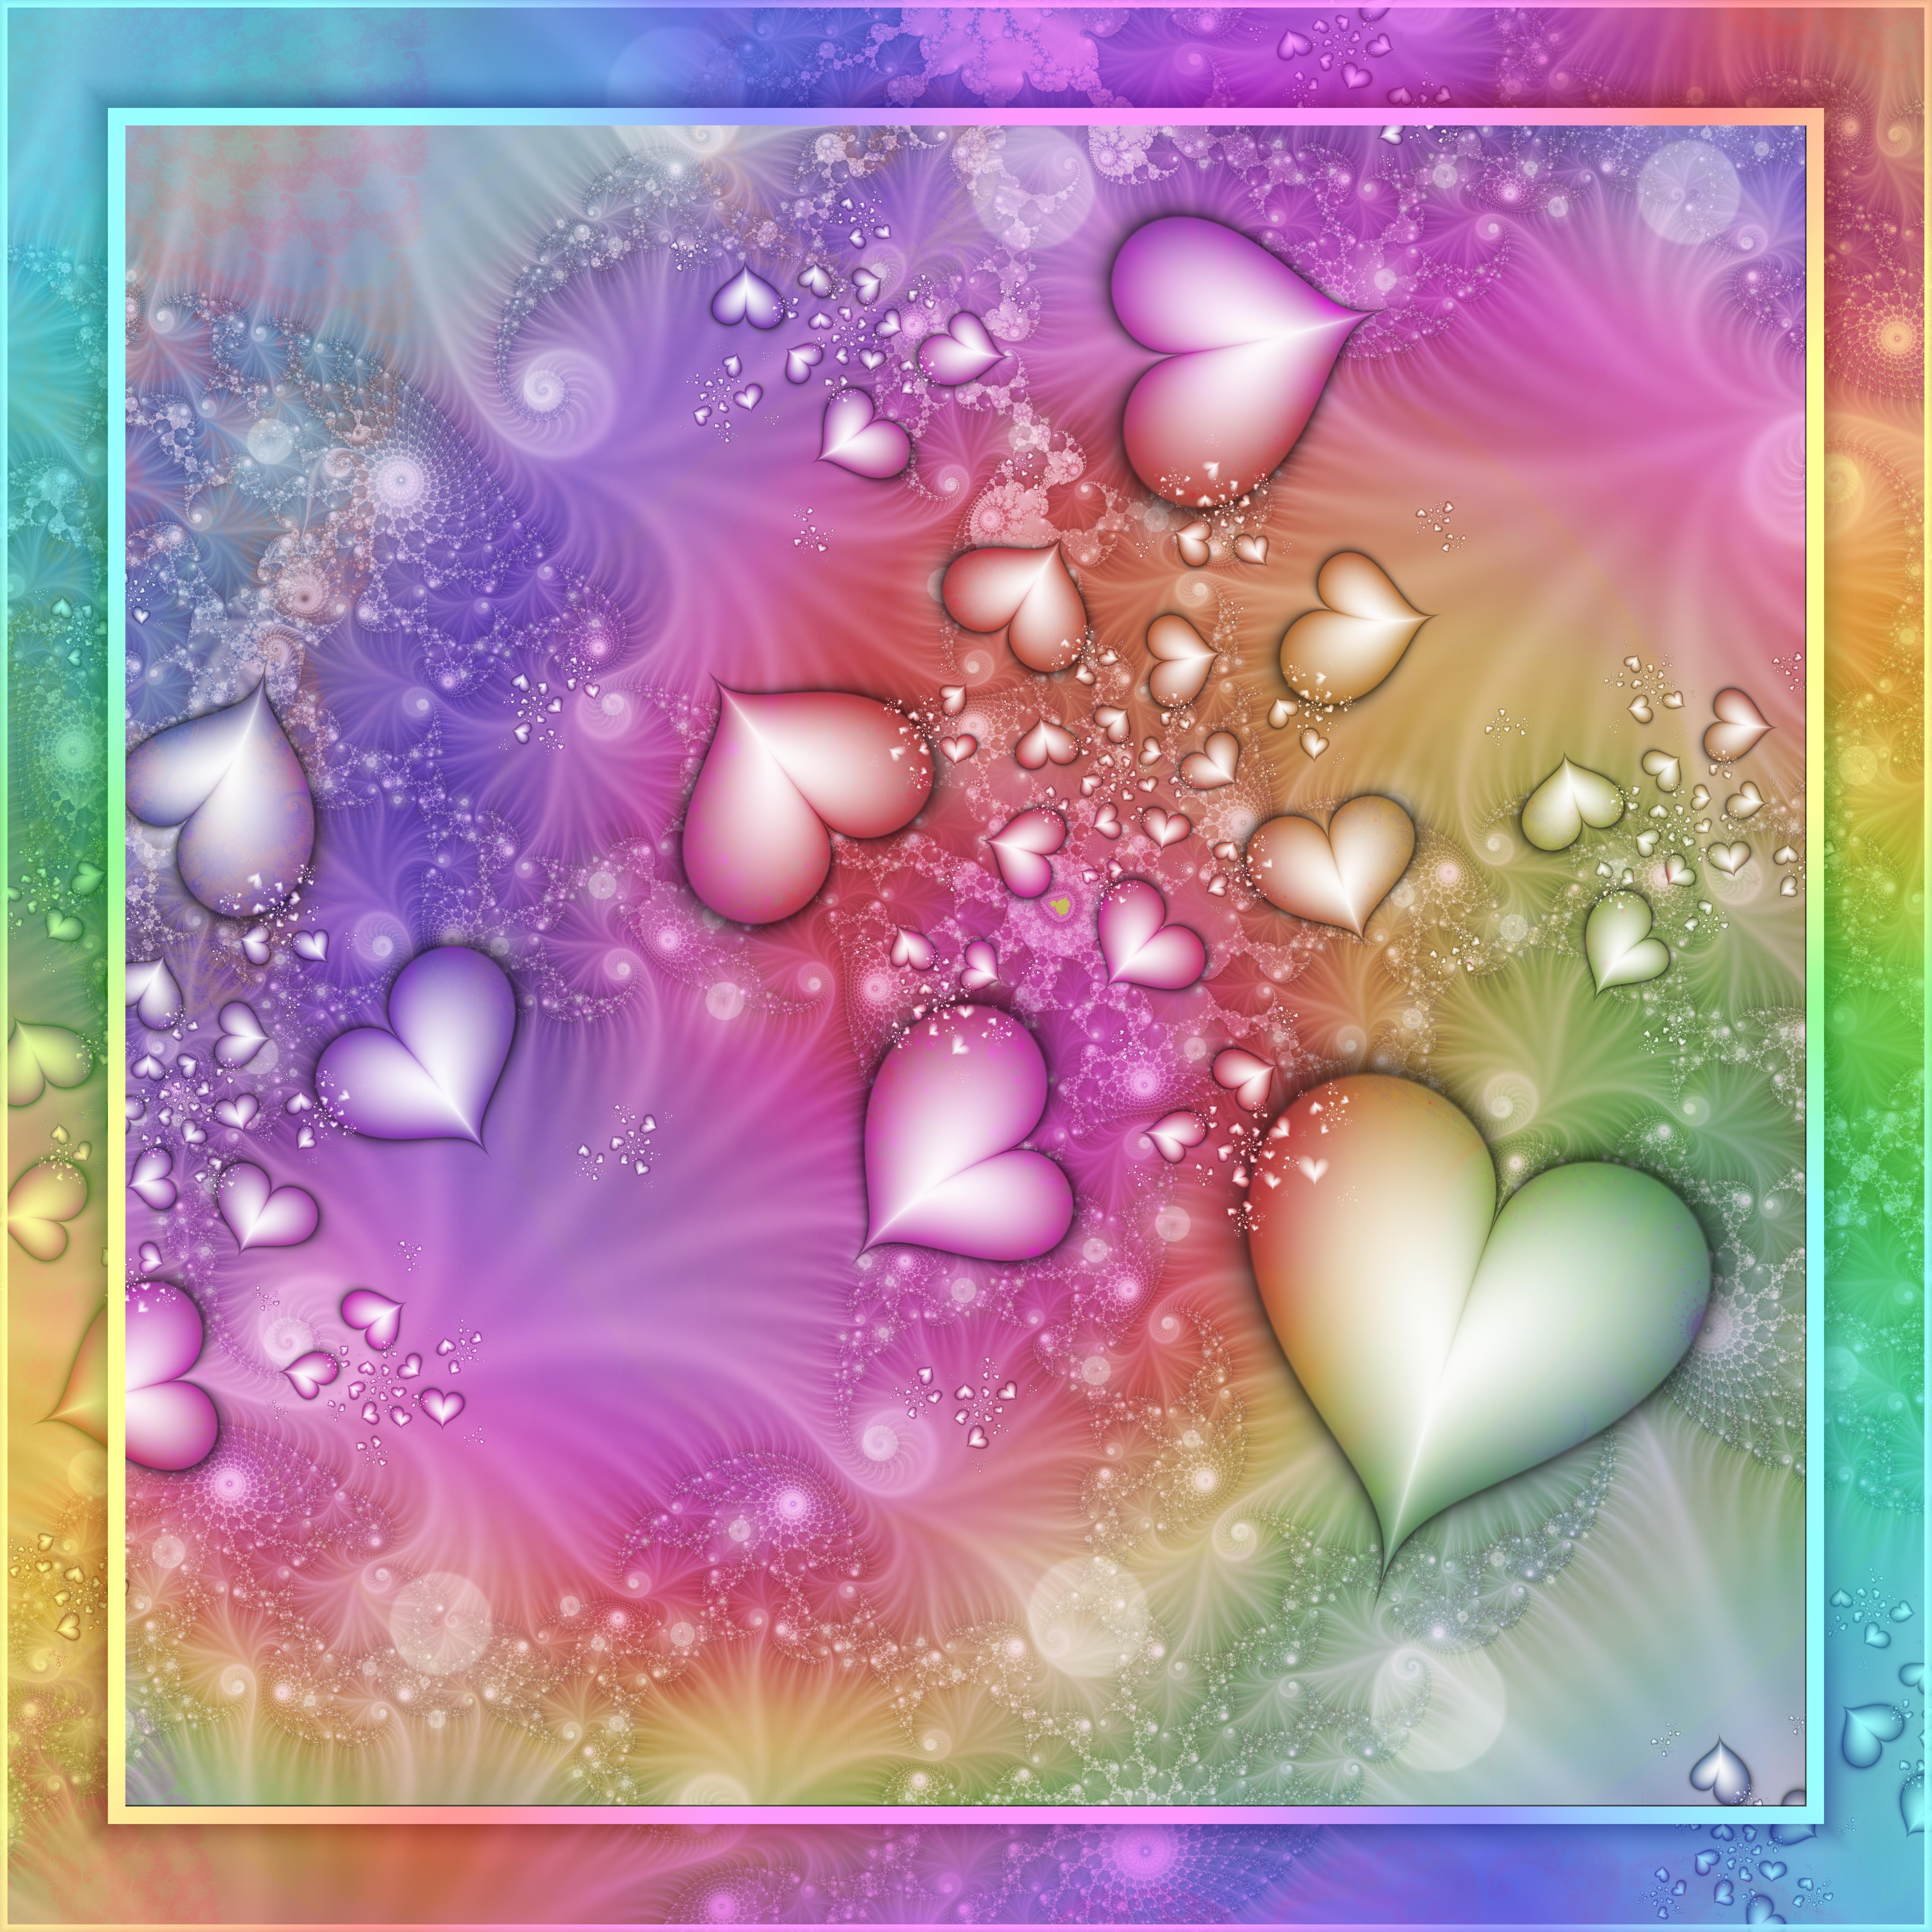 rainbow_love_fractal_by_kirstenstar-dbj64c3 (1).jpg